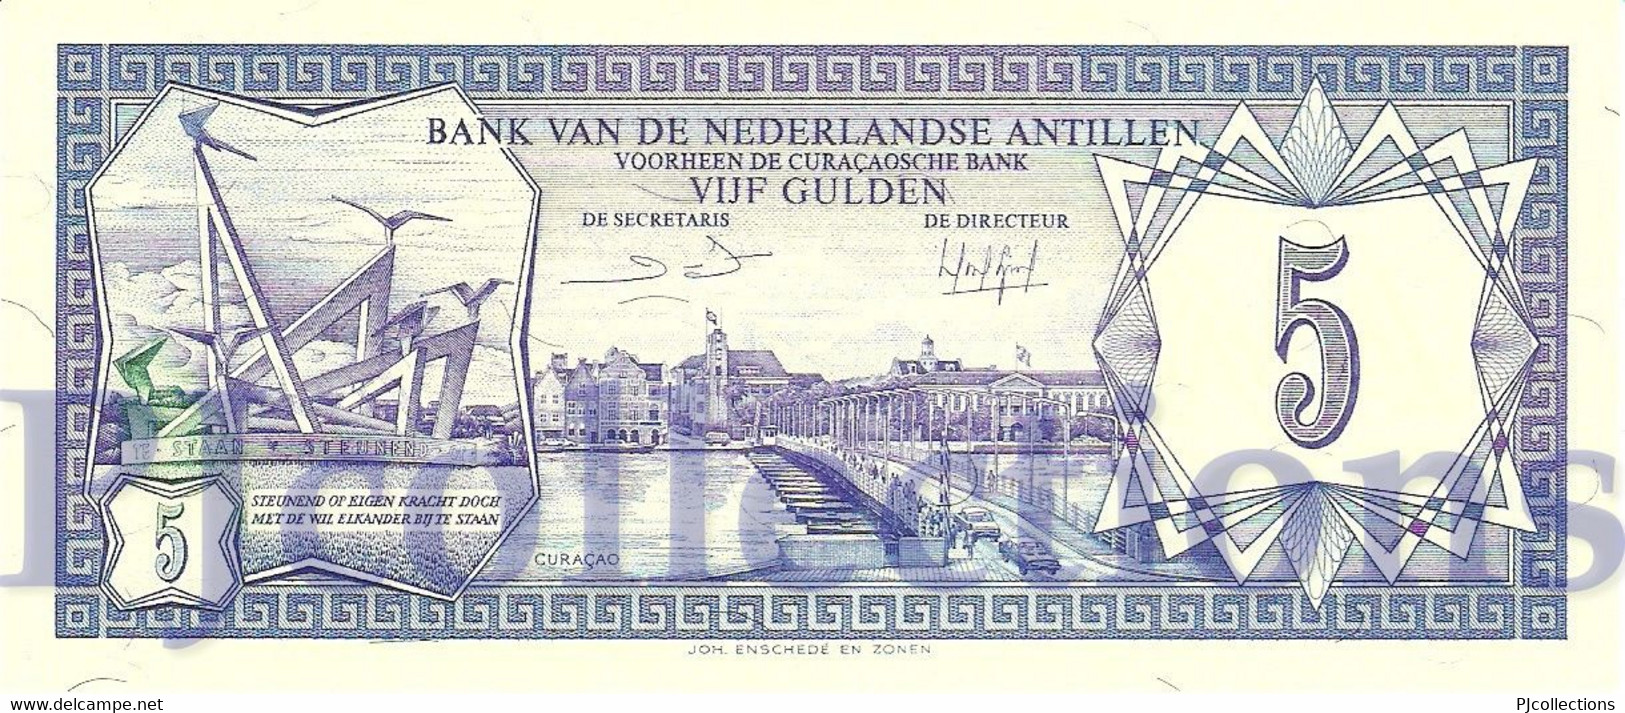 NETHERLANDS ANTILLES 5 GULDEN 1984 PICK 15b UNC - Antilles Néerlandaises (...-1986)